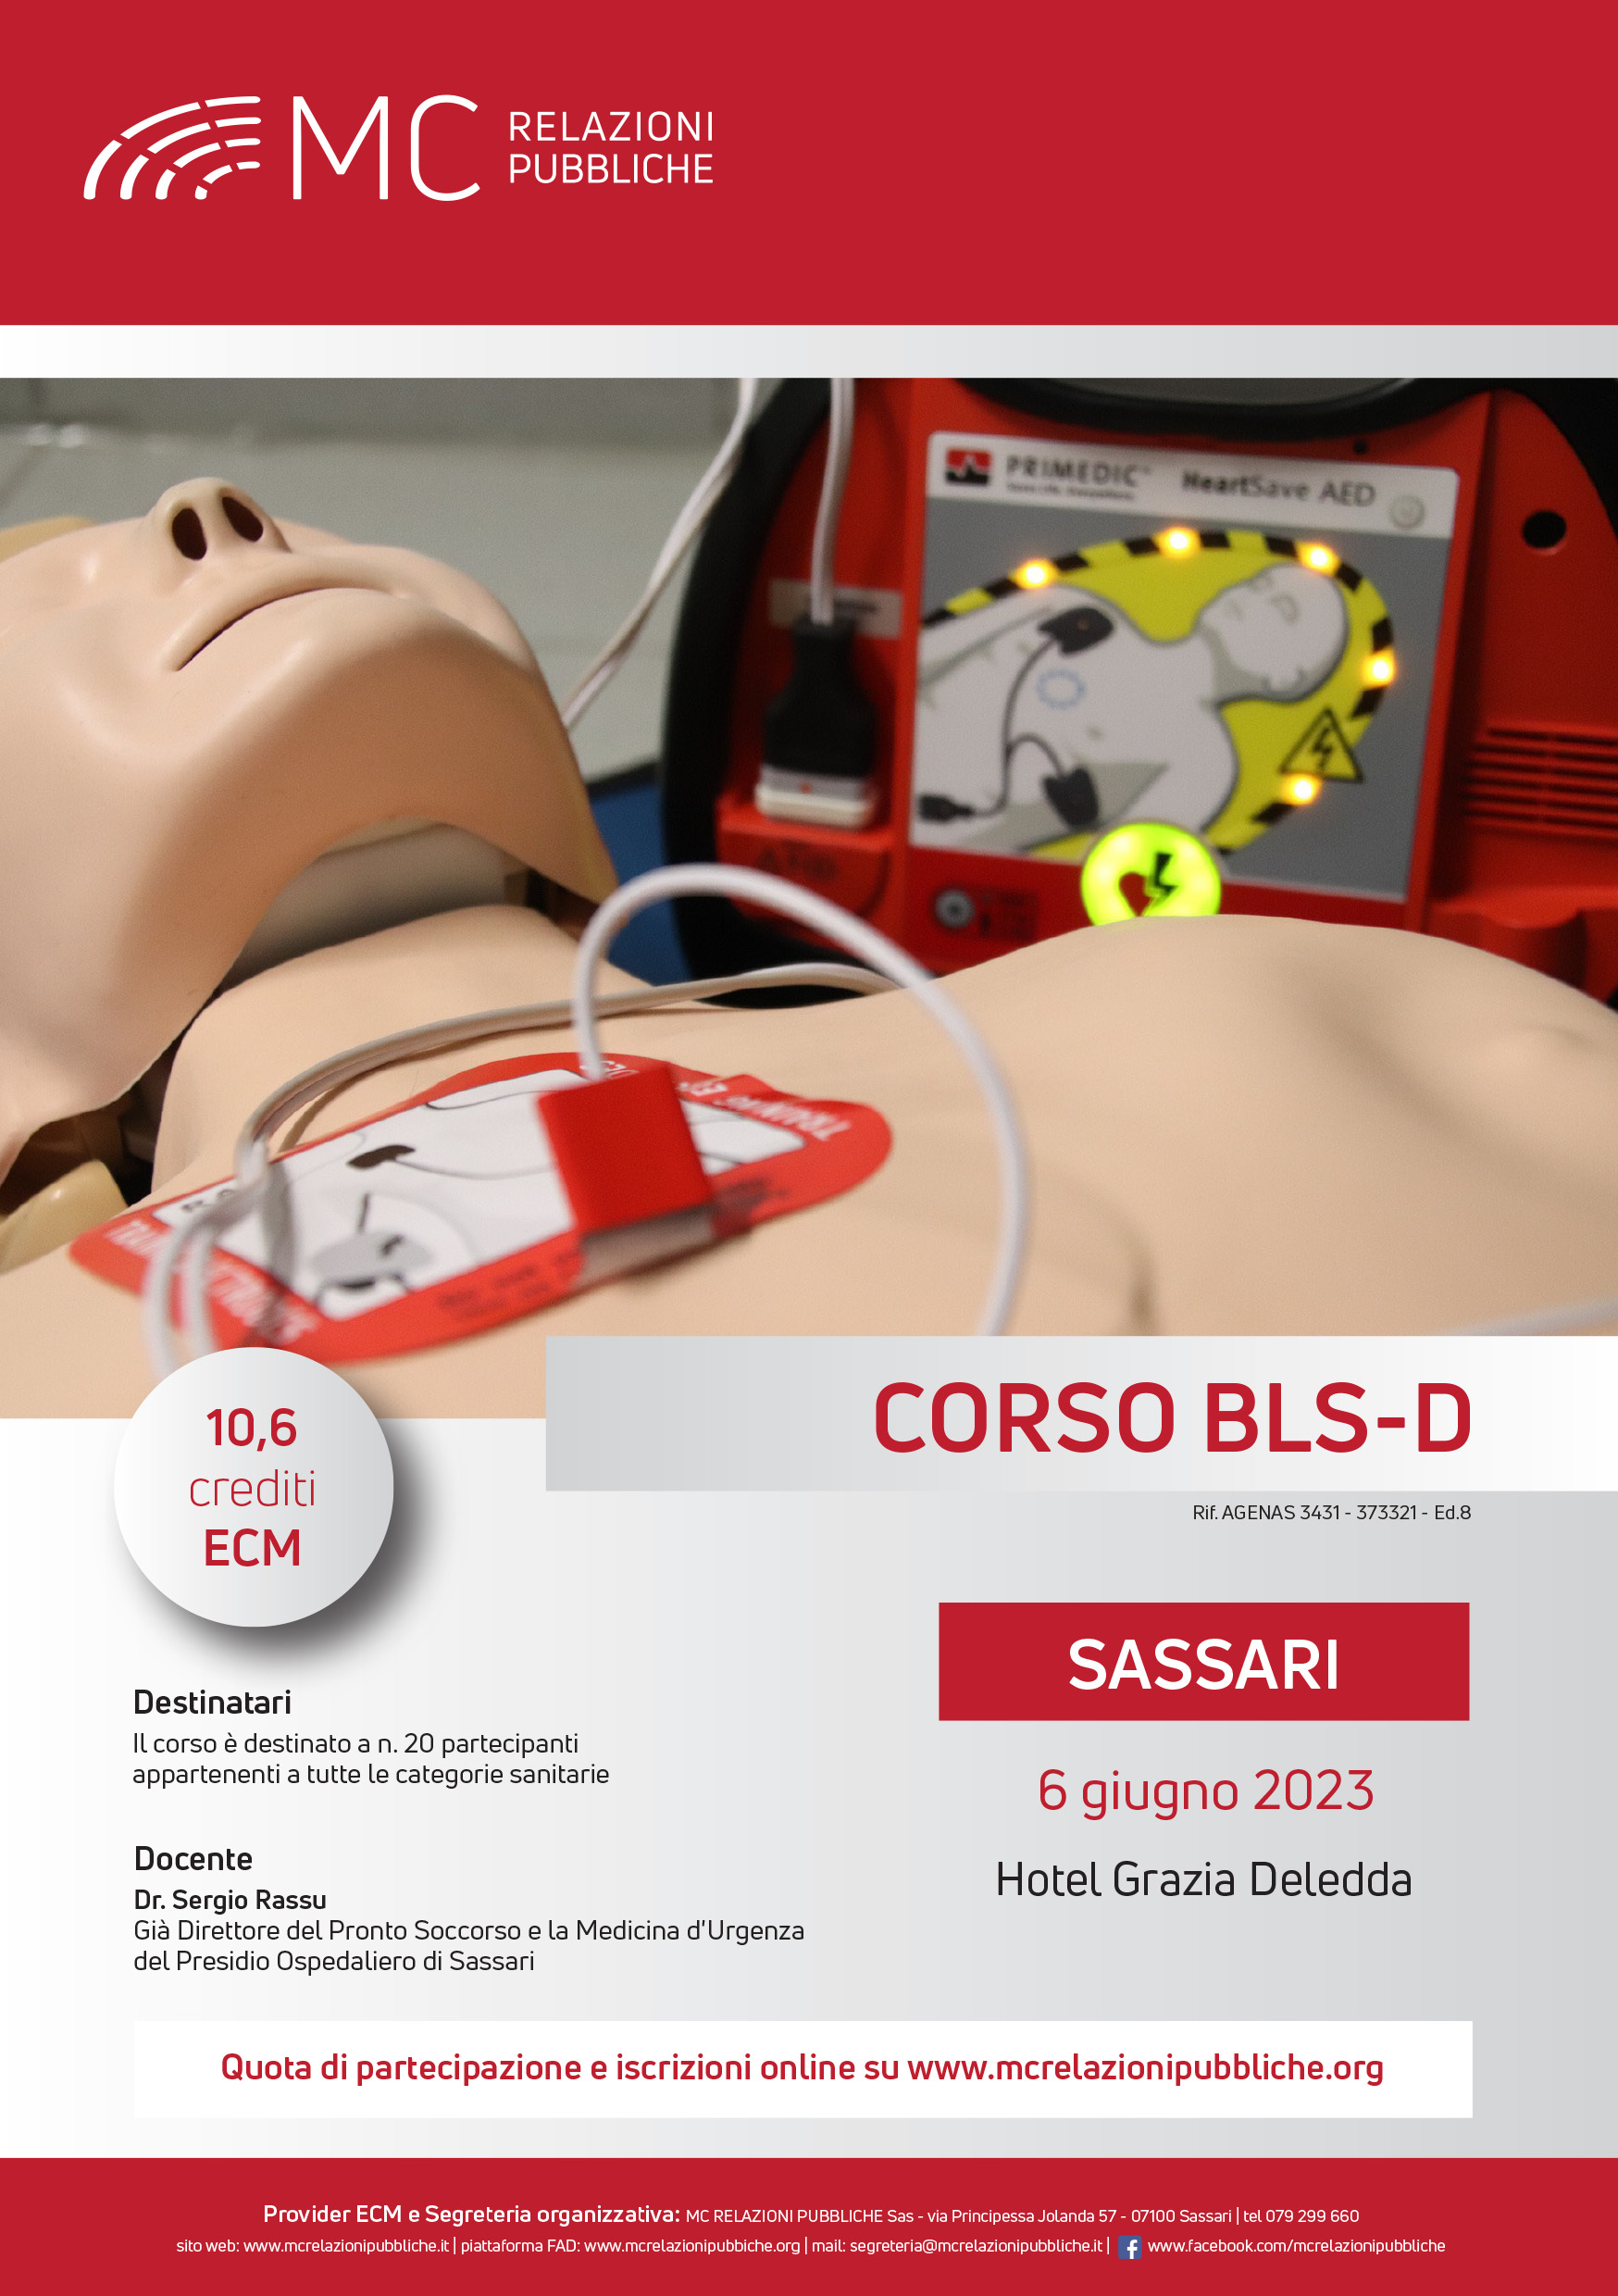 Corso BLS-D. Basic Life Support-Defibrillation - 6 giugno 2023